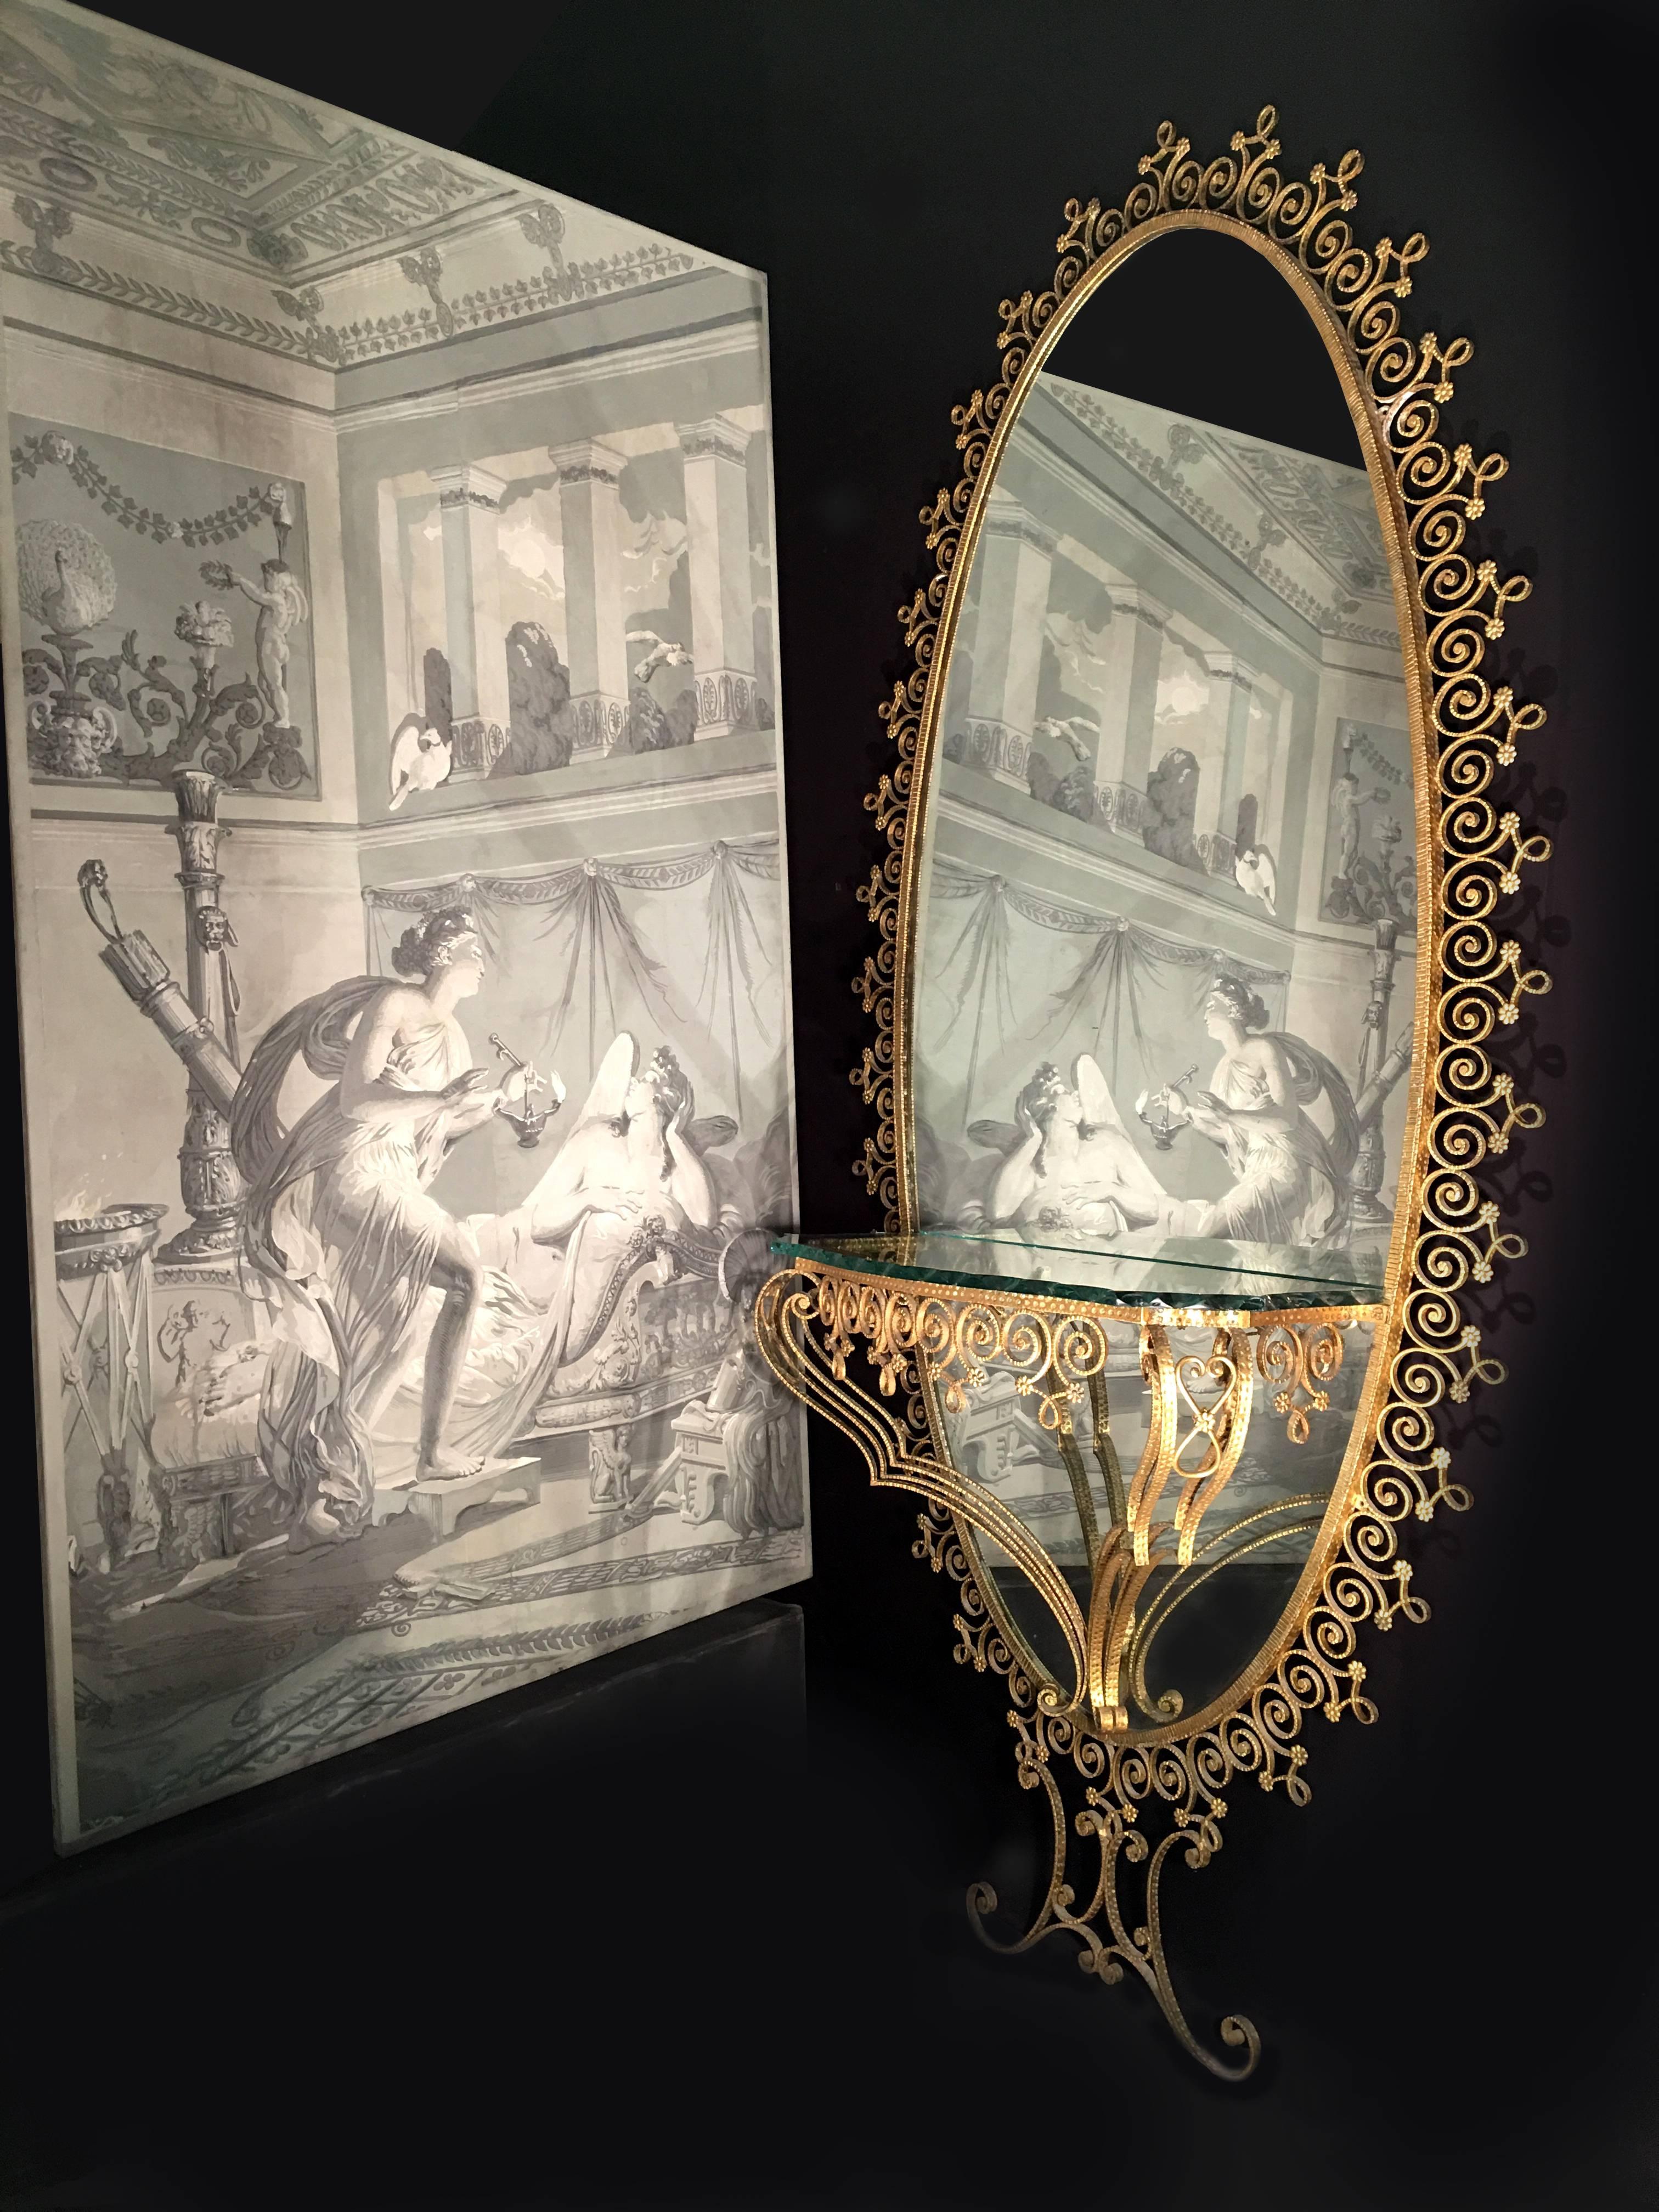 Italian gilt-metal console table and mirror by Pier Luigi Colli, circa 1950s-1960s, a monumental mirror having a 